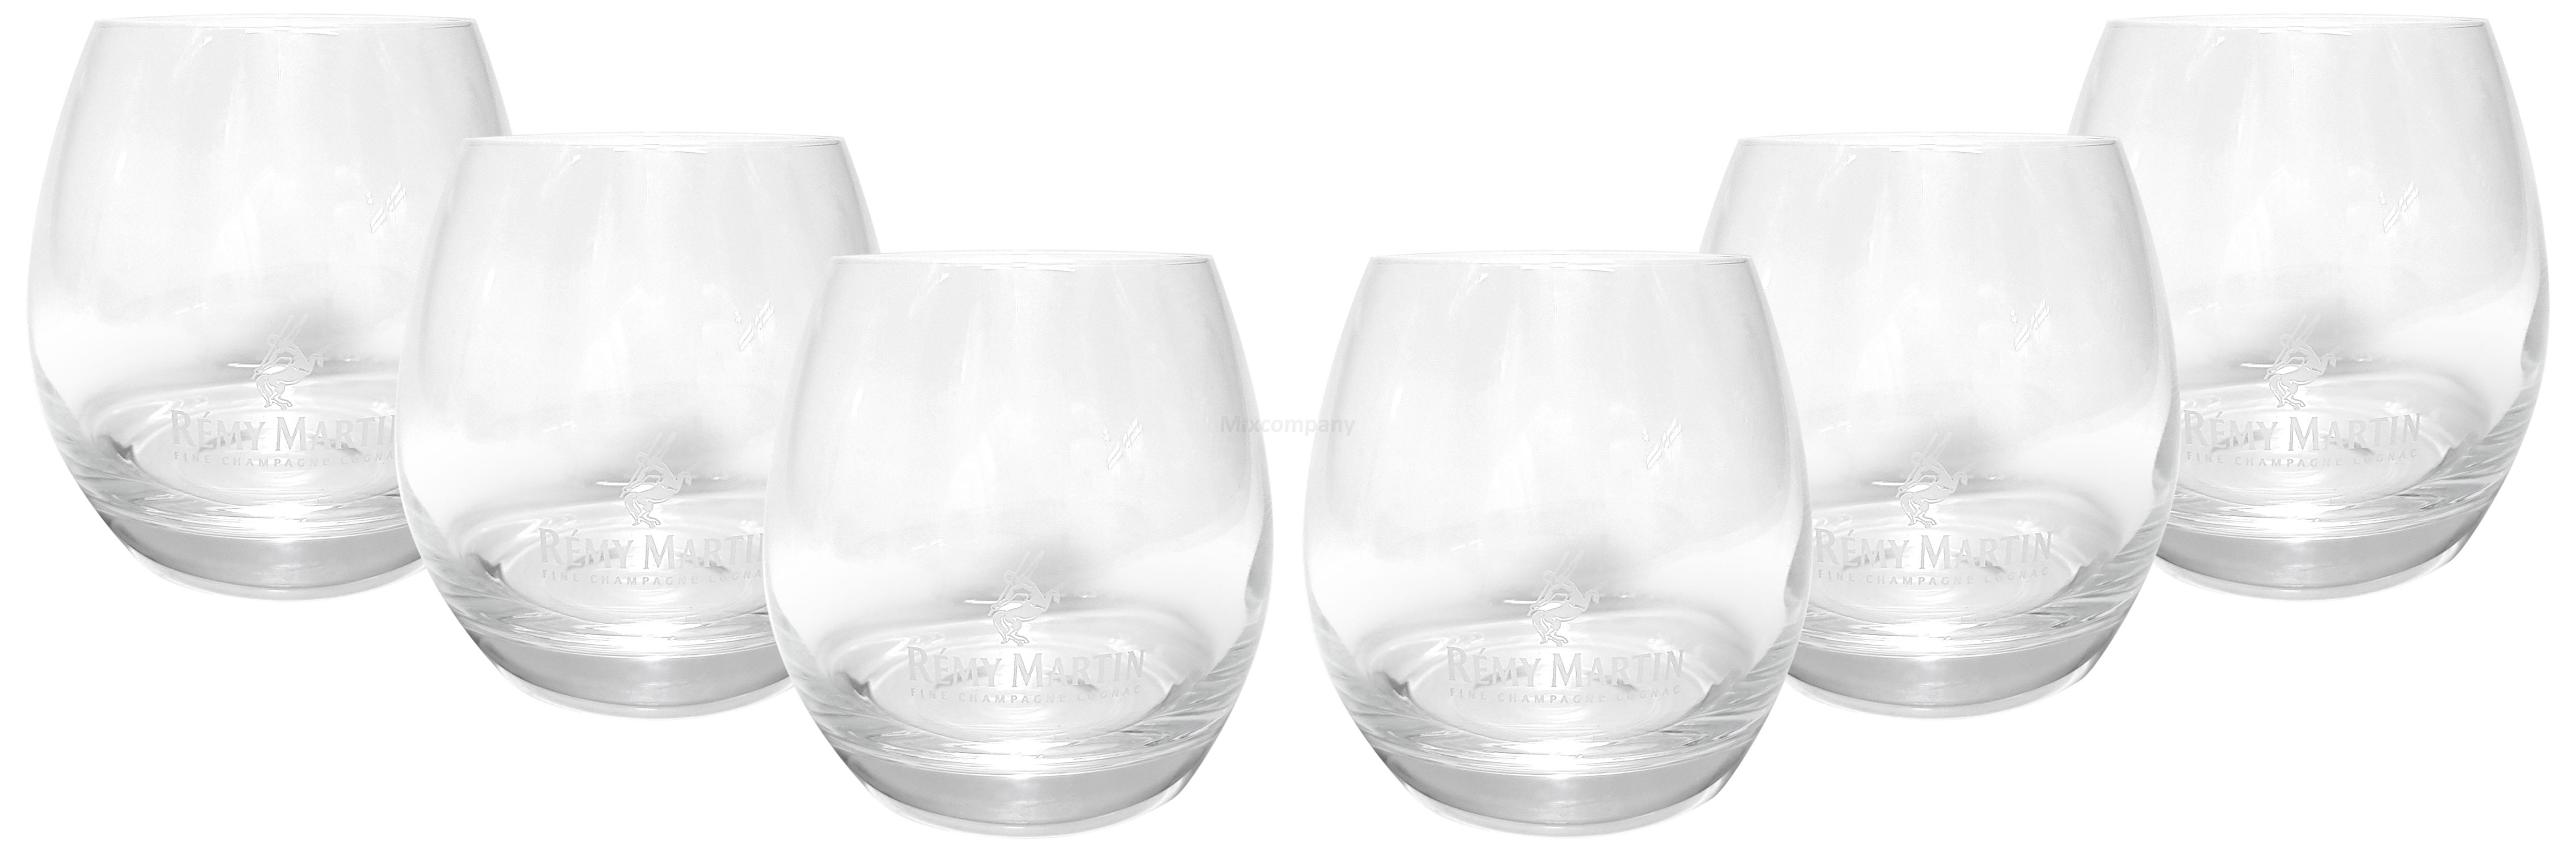 Remy Martin Tumbler Cognac Glas Gläserset - 6x Tumbler